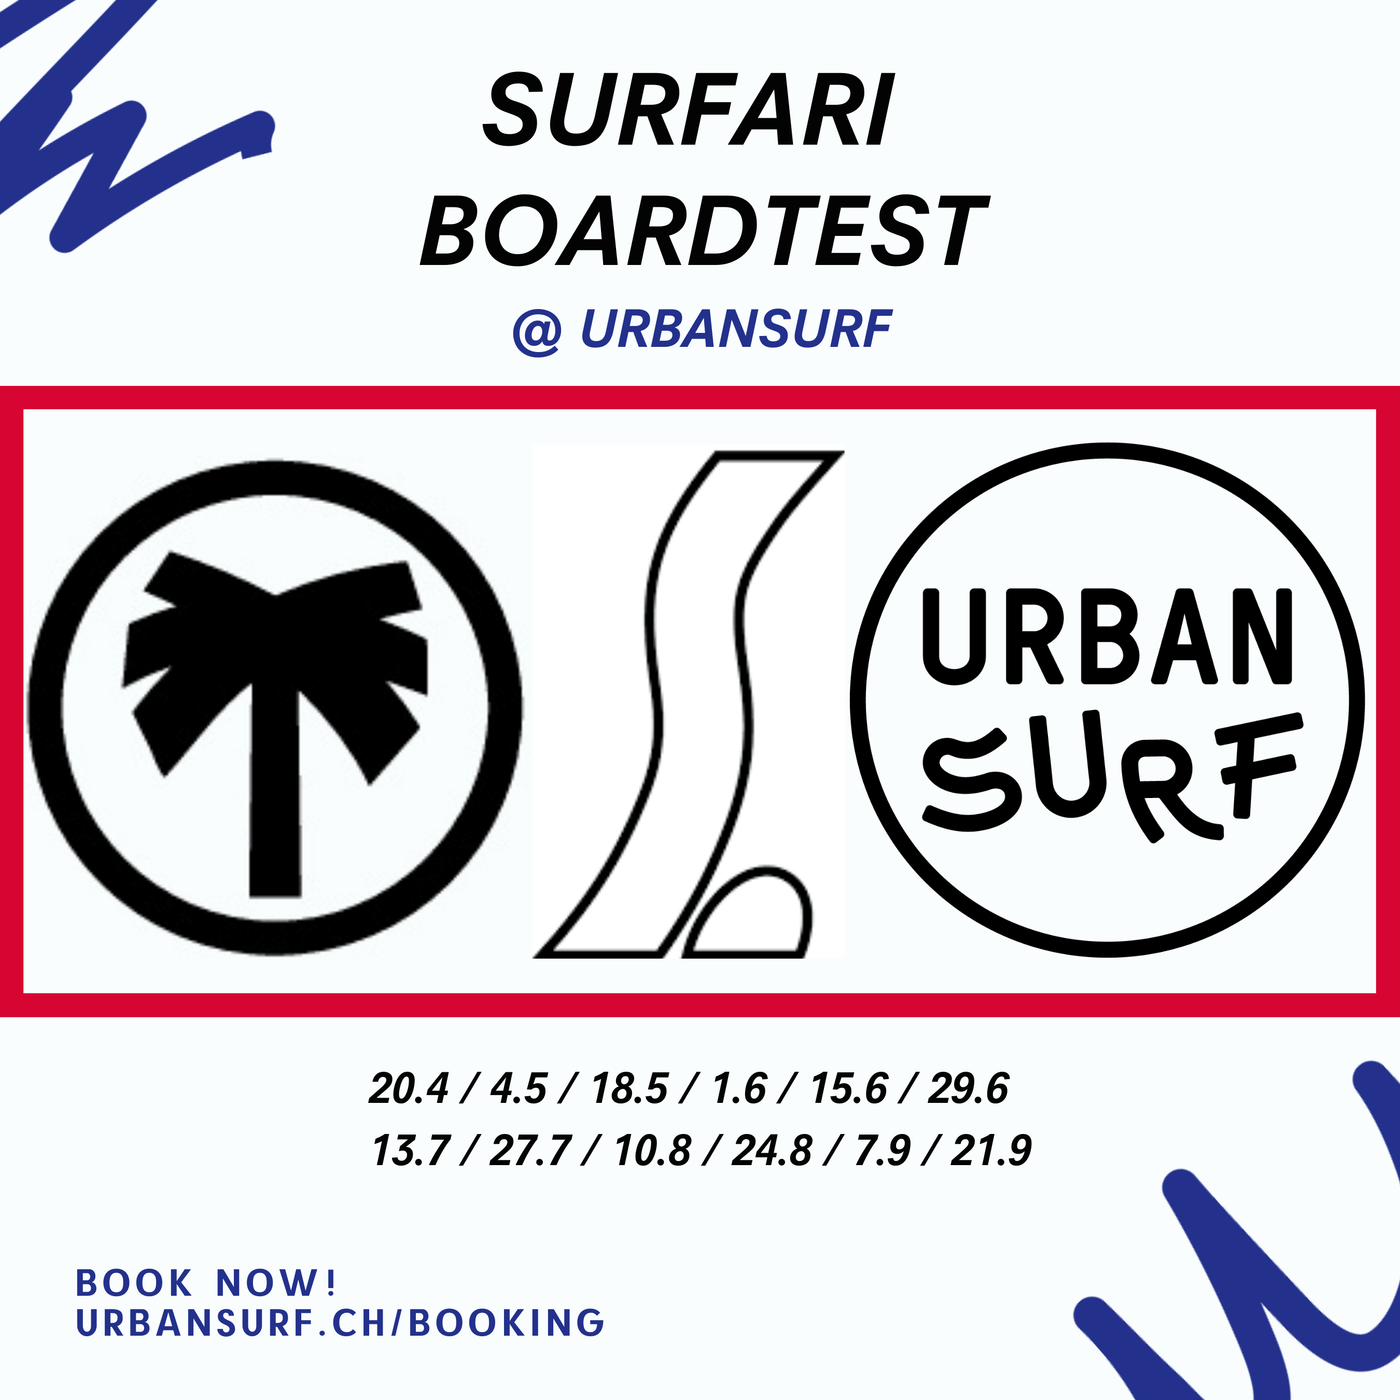 Surfari Boardtestdays @Urbansurf